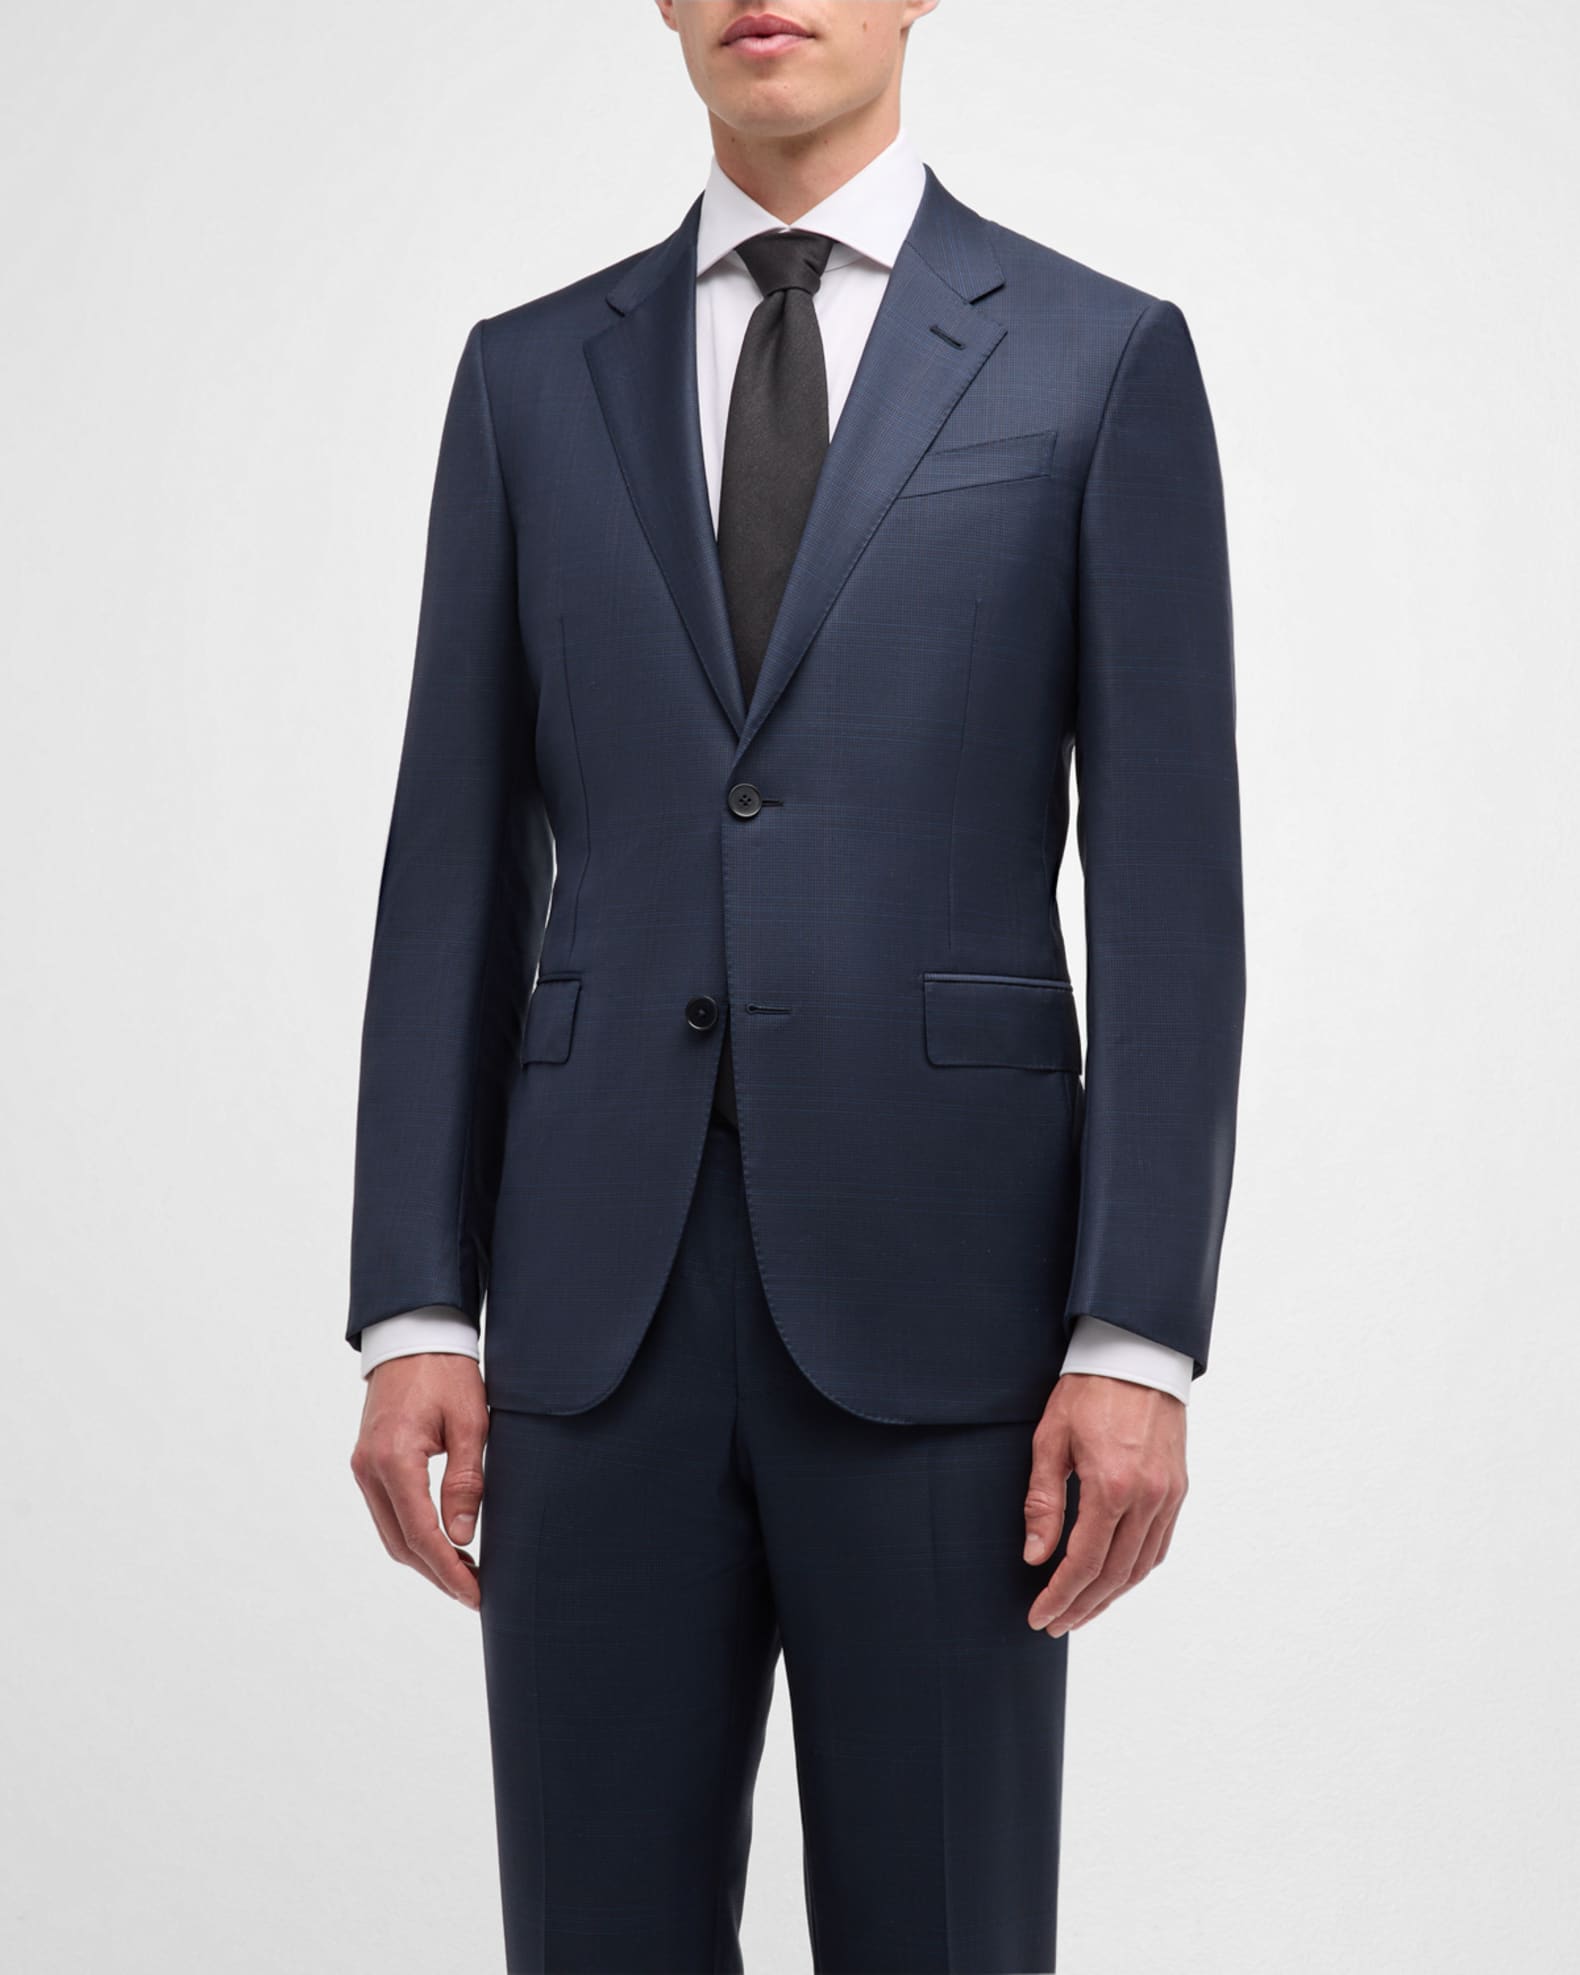 ZEGNA Men's Micro Houndstooth Plaid Suit | Neiman Marcus